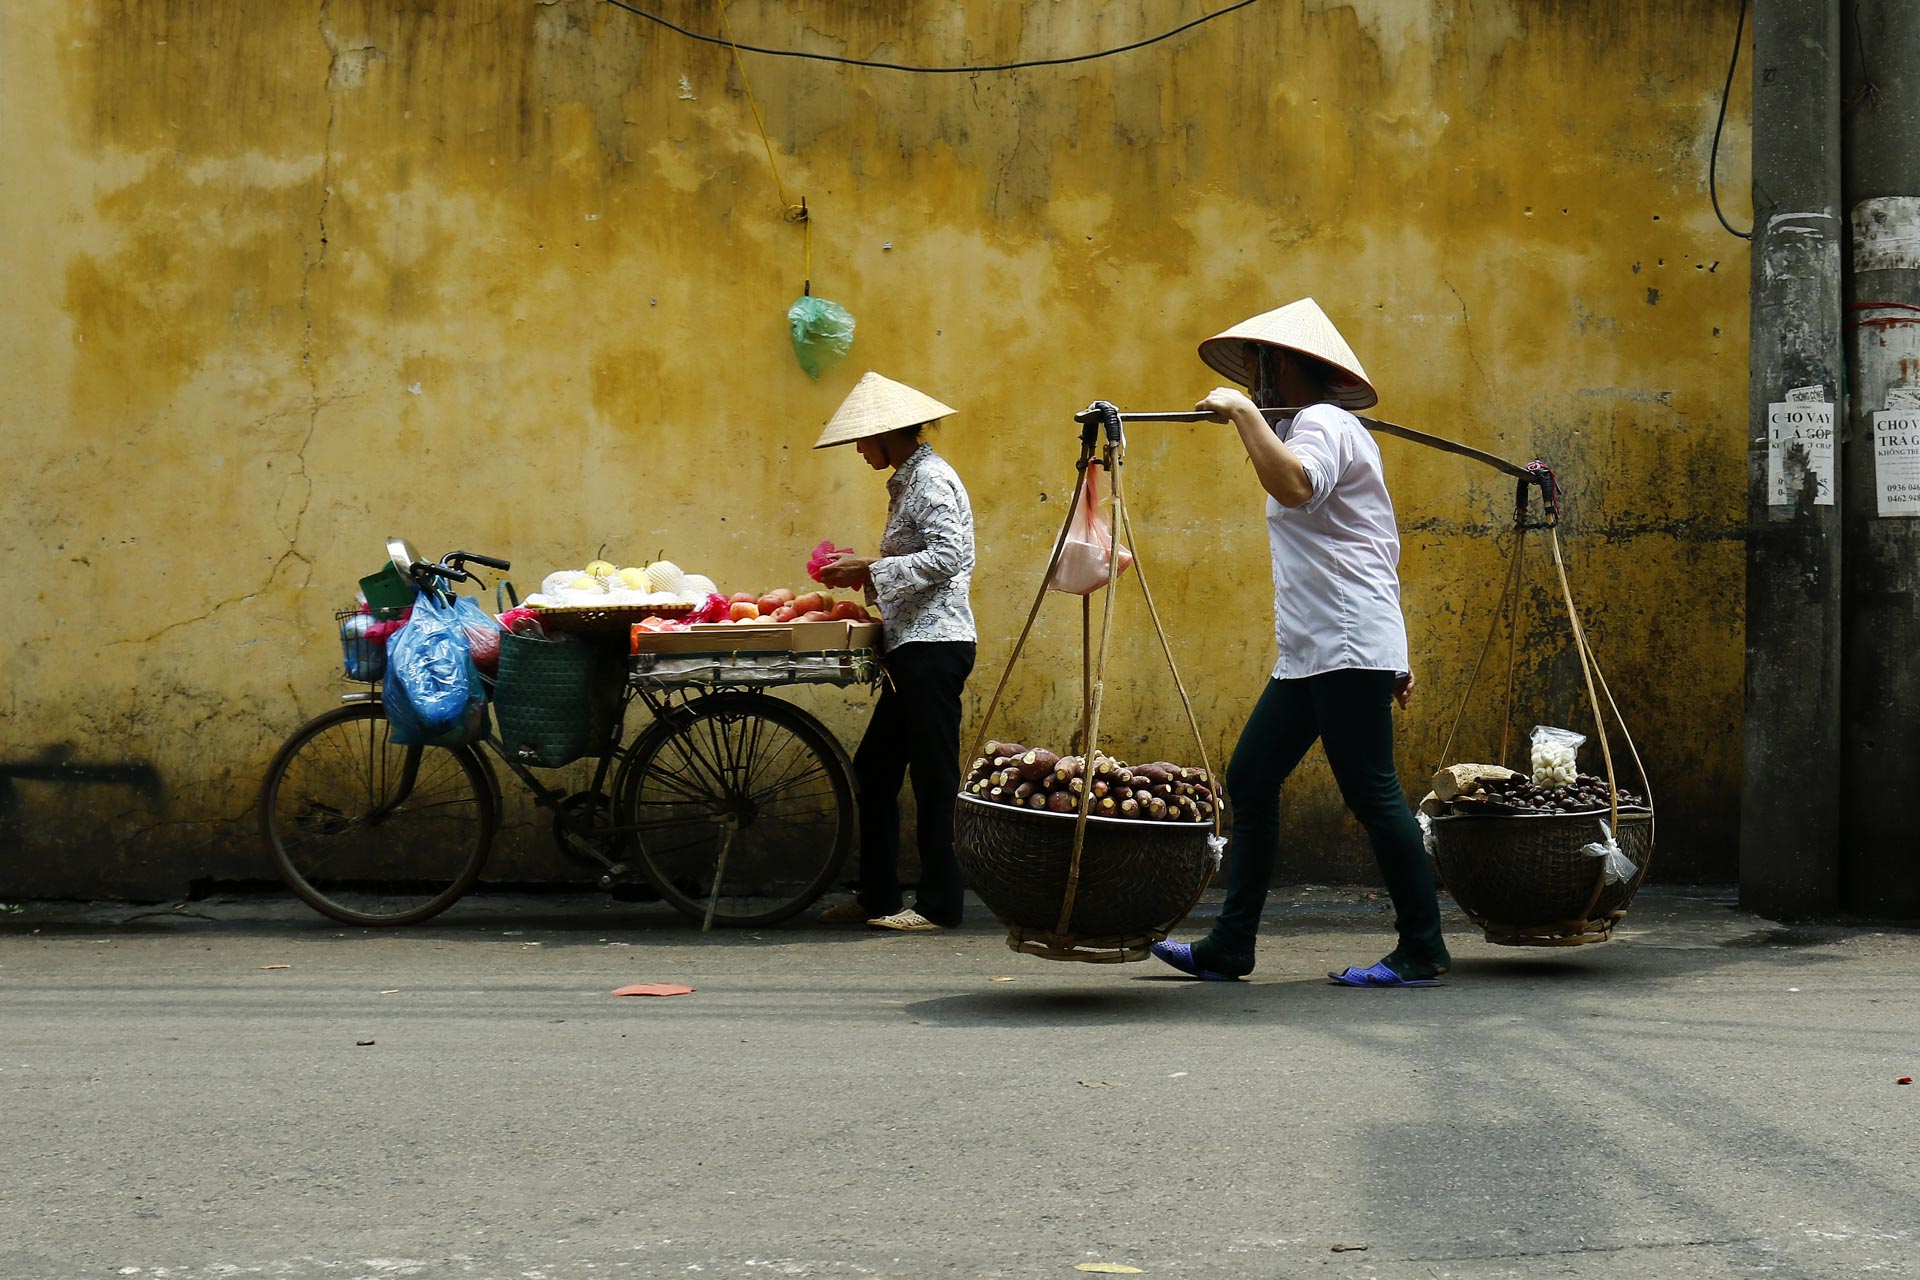 /fm/Files//Pictures/Ido Uploads/Asia/Vietnam/Hoi An/Hoi An - Native In City Street - NS - SS.jpg